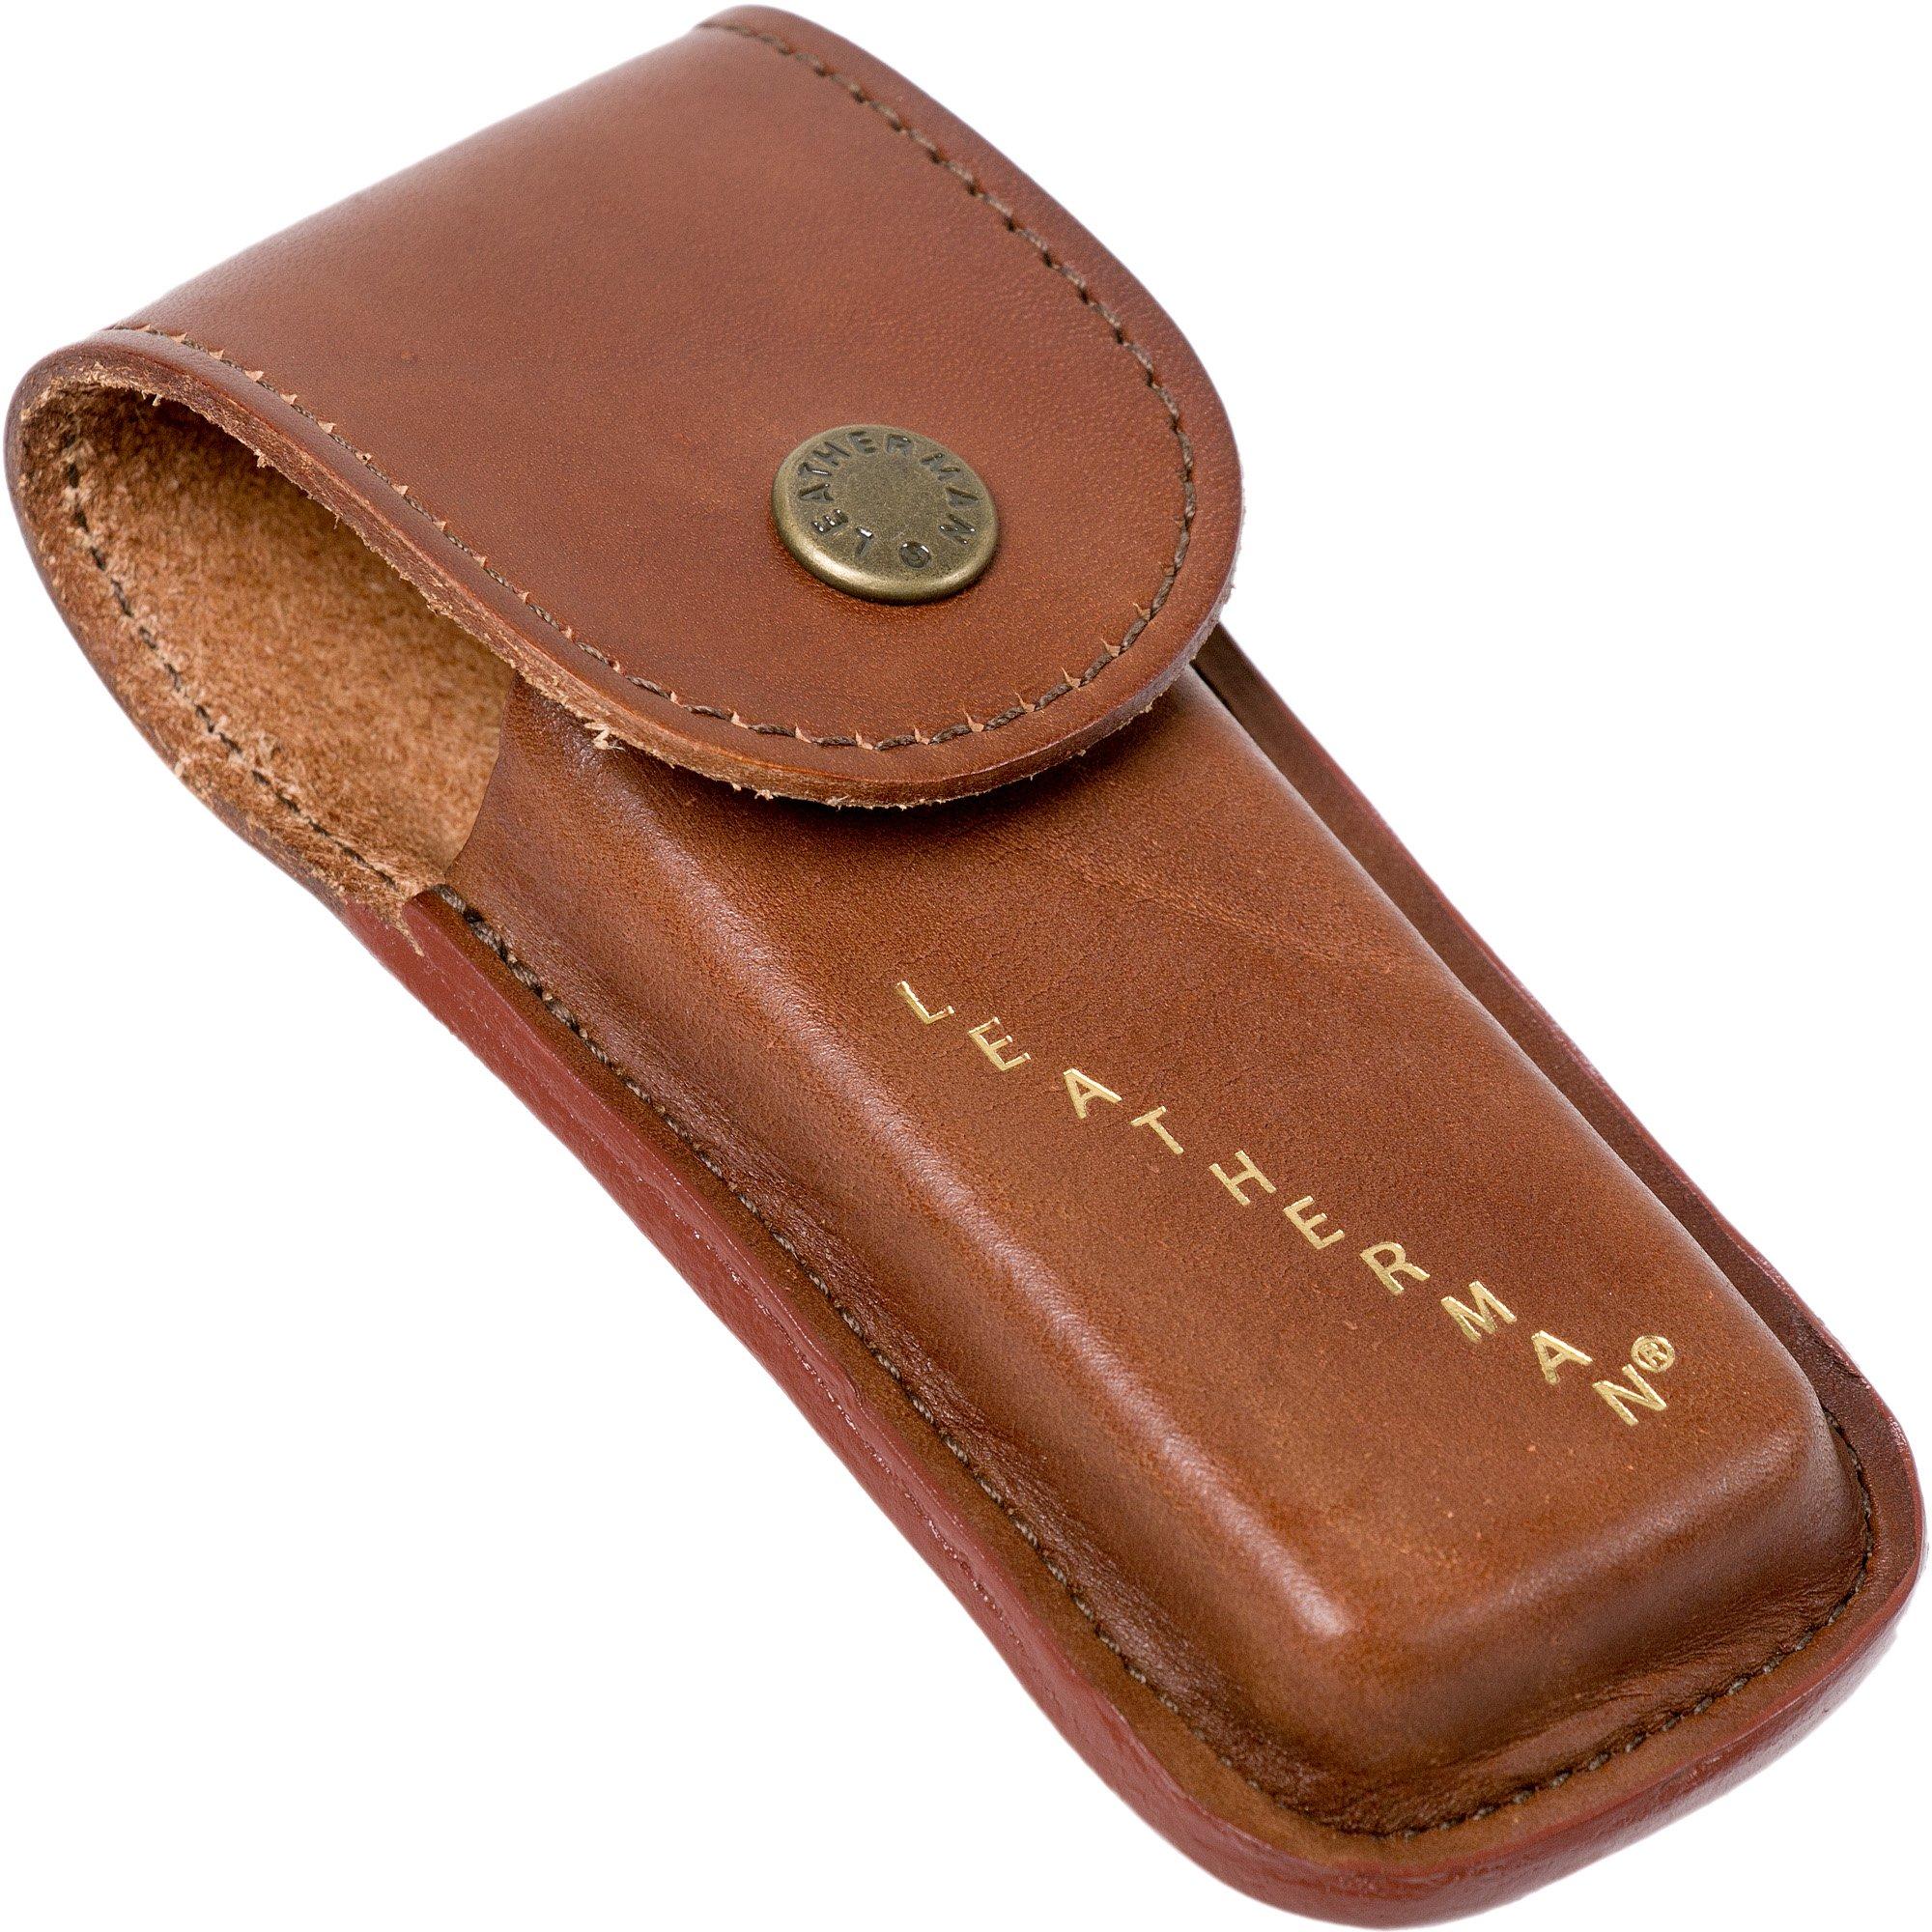 Leatherman Wave, leather sheath  Advantageously shopping at